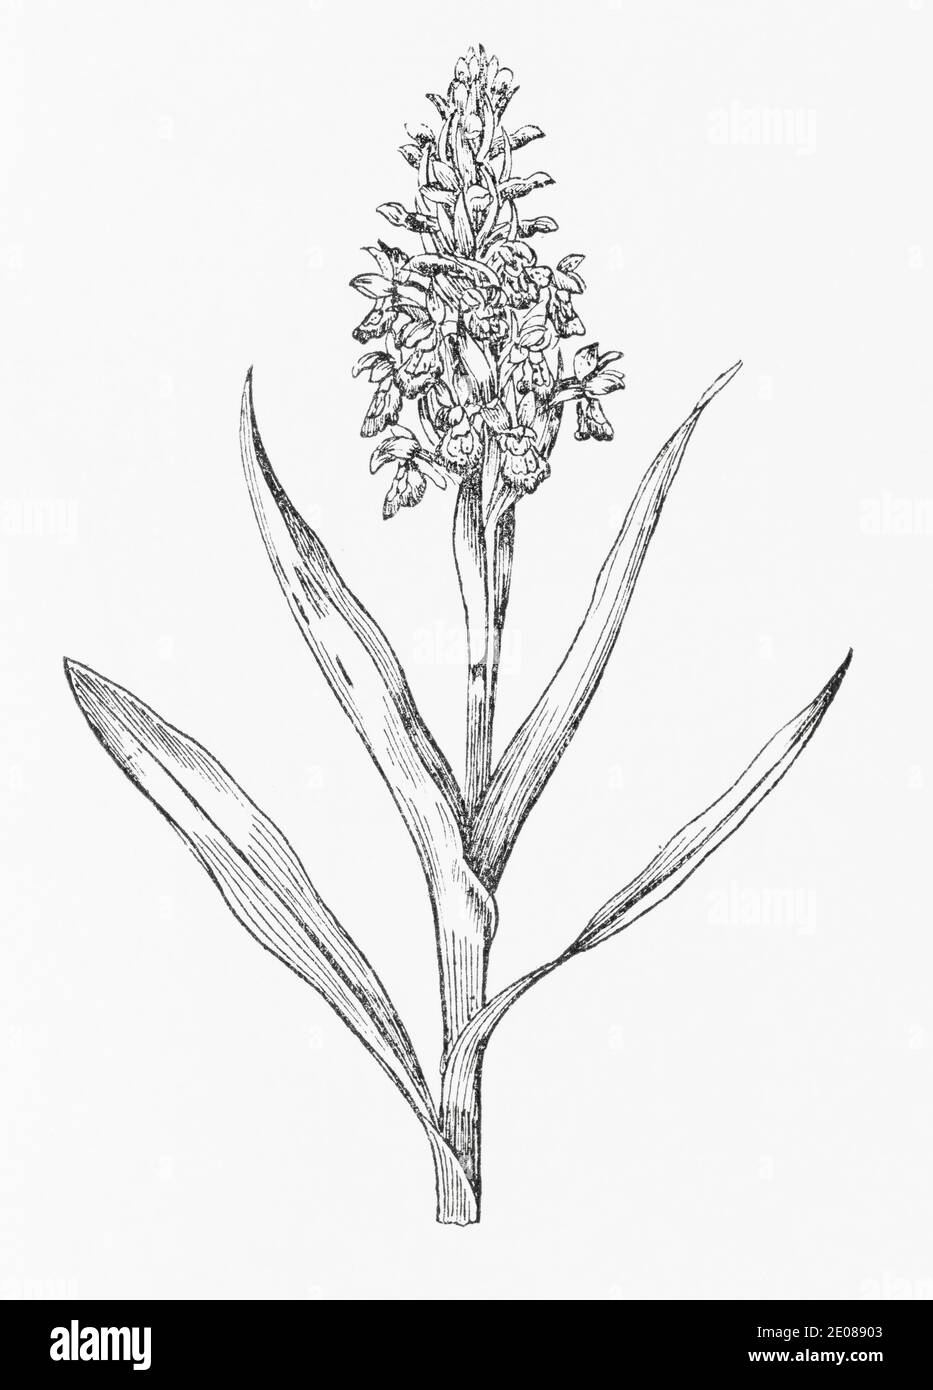 Old botanical illustration engraving of Marsh Orchid / Dactylorhiza incarnata. Traditional medicinal herbal plant. See Notes Stock Photo